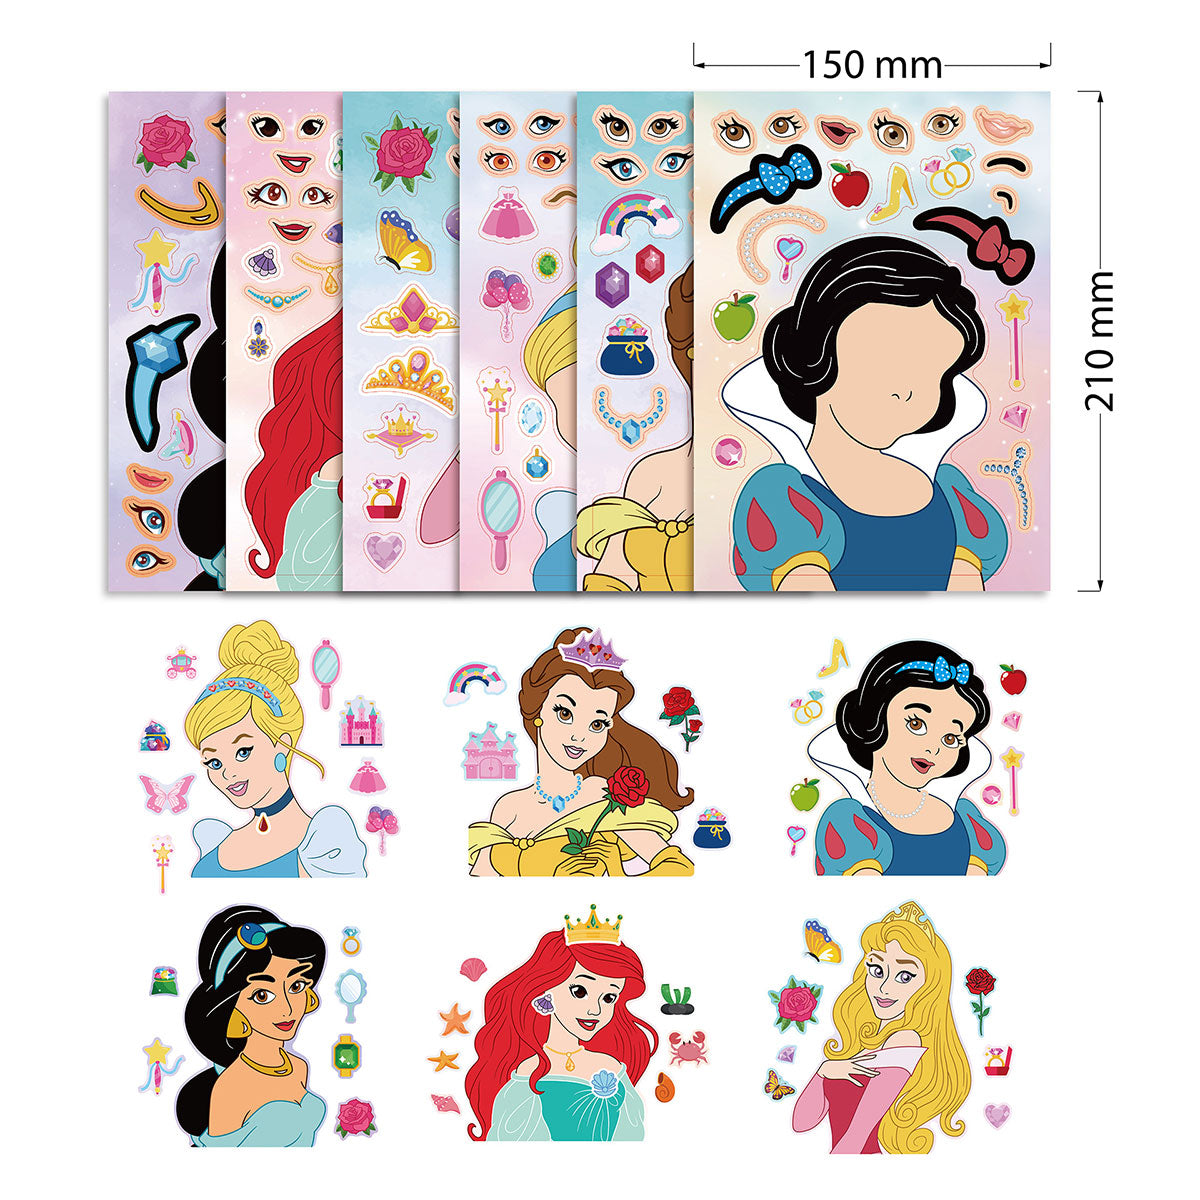 Lovely Disney Princesses activity sticker sheets.